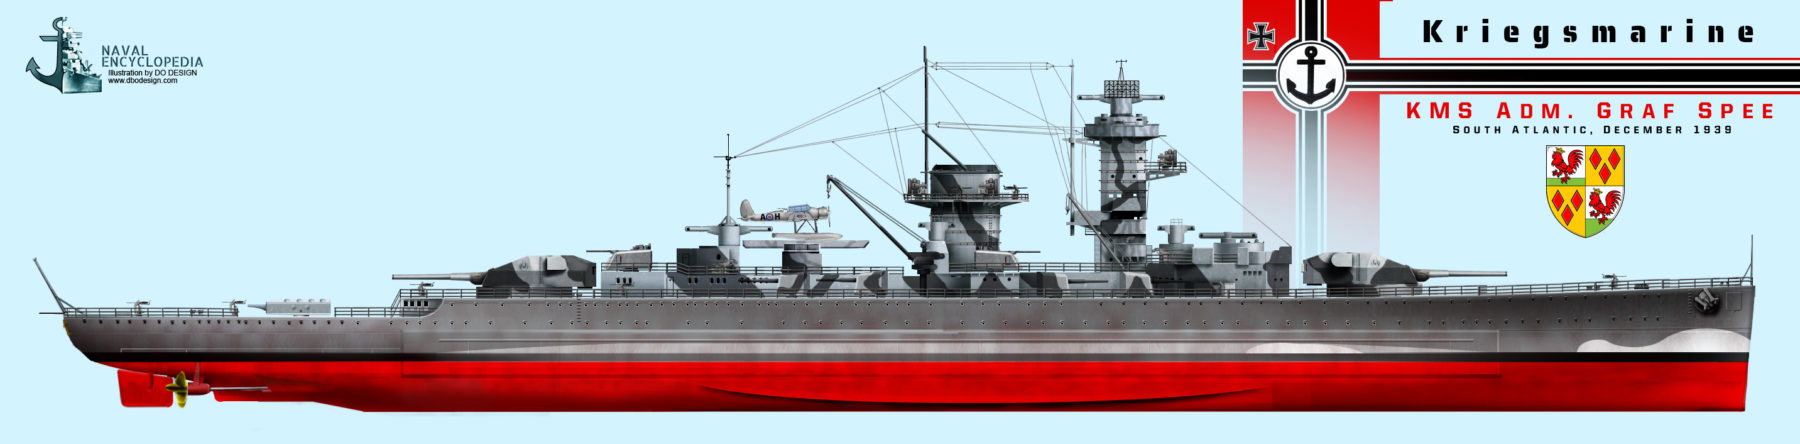 KMS Admiral Graf Spee, South Atlantic December 1939